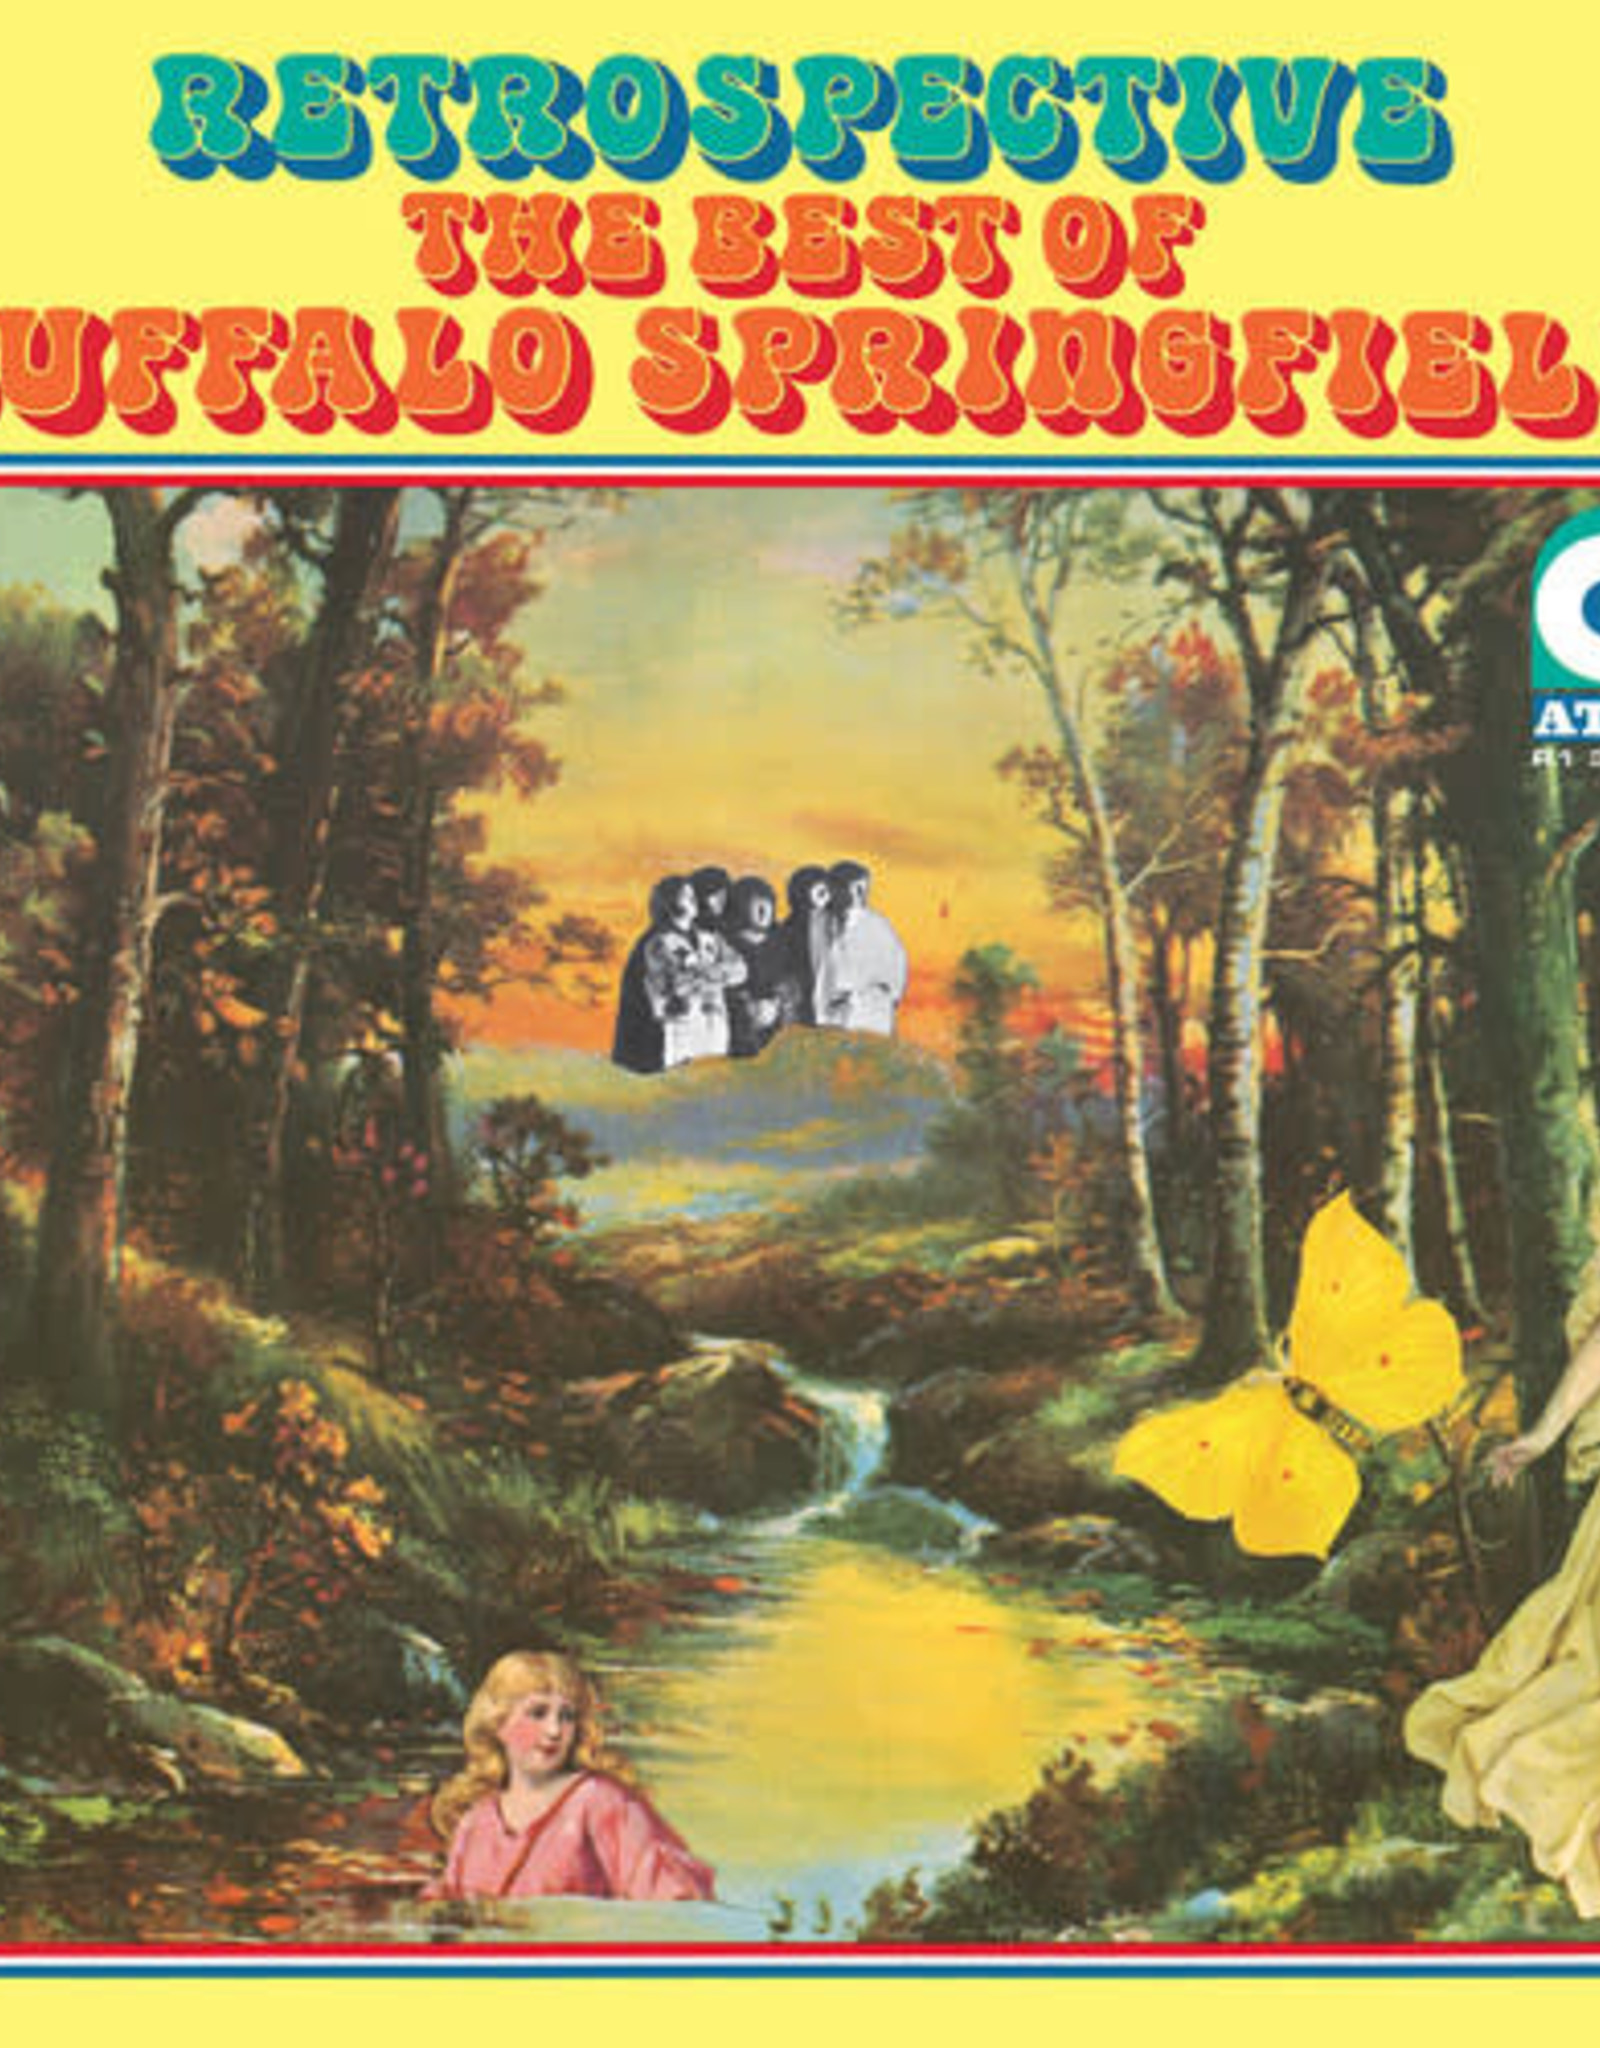 Buffalo Springfield - Retrospective: The Best Of Buffalo Springfield (180 g)